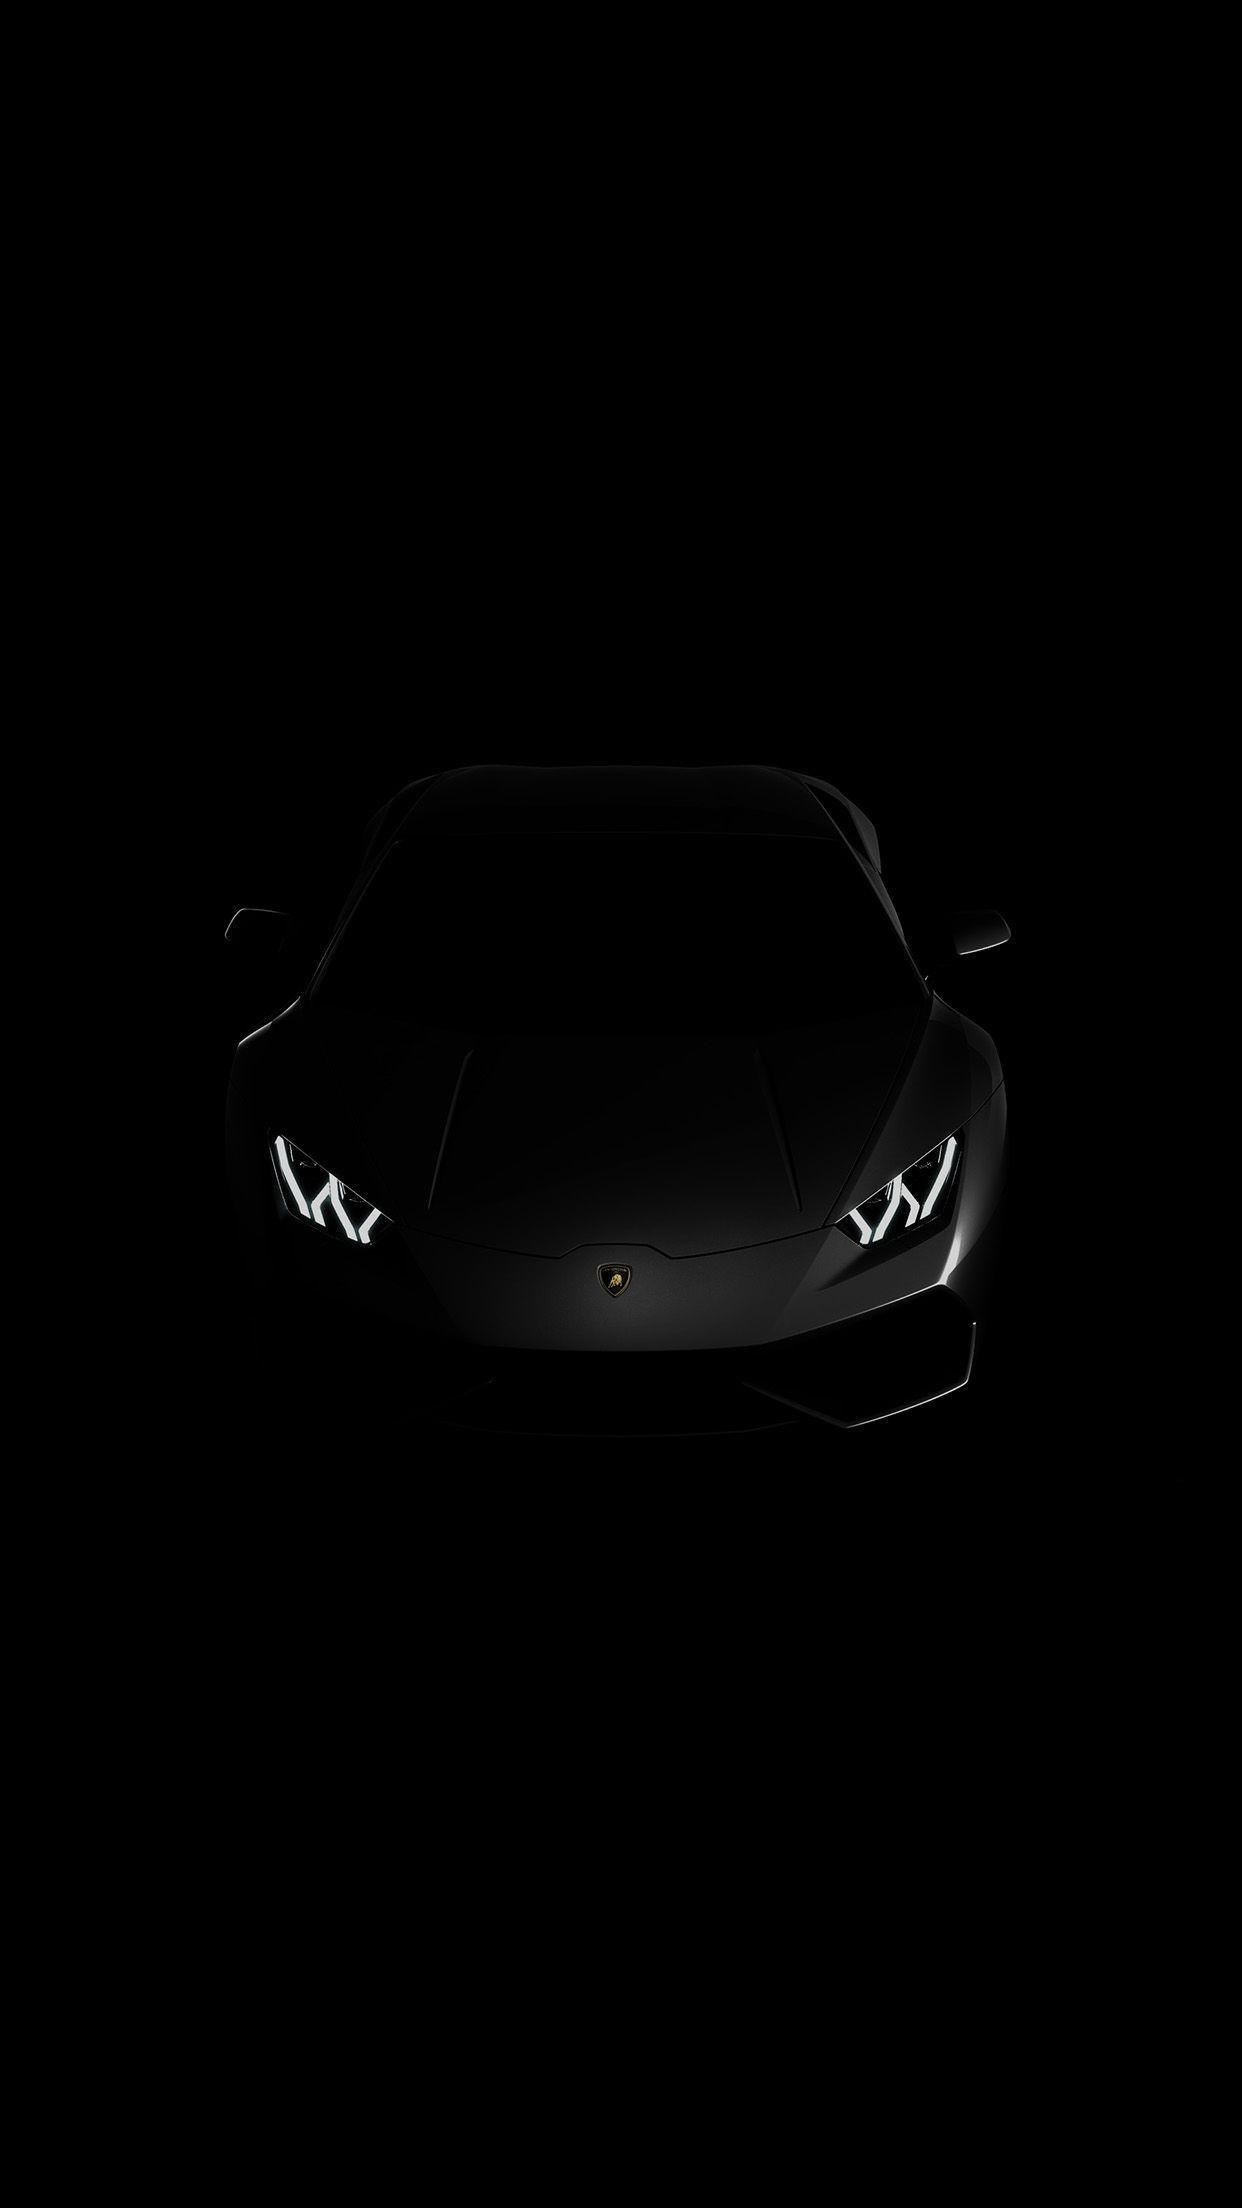 Lamborghini Black Super Car Shadow Android Wallpaper. alles dabei